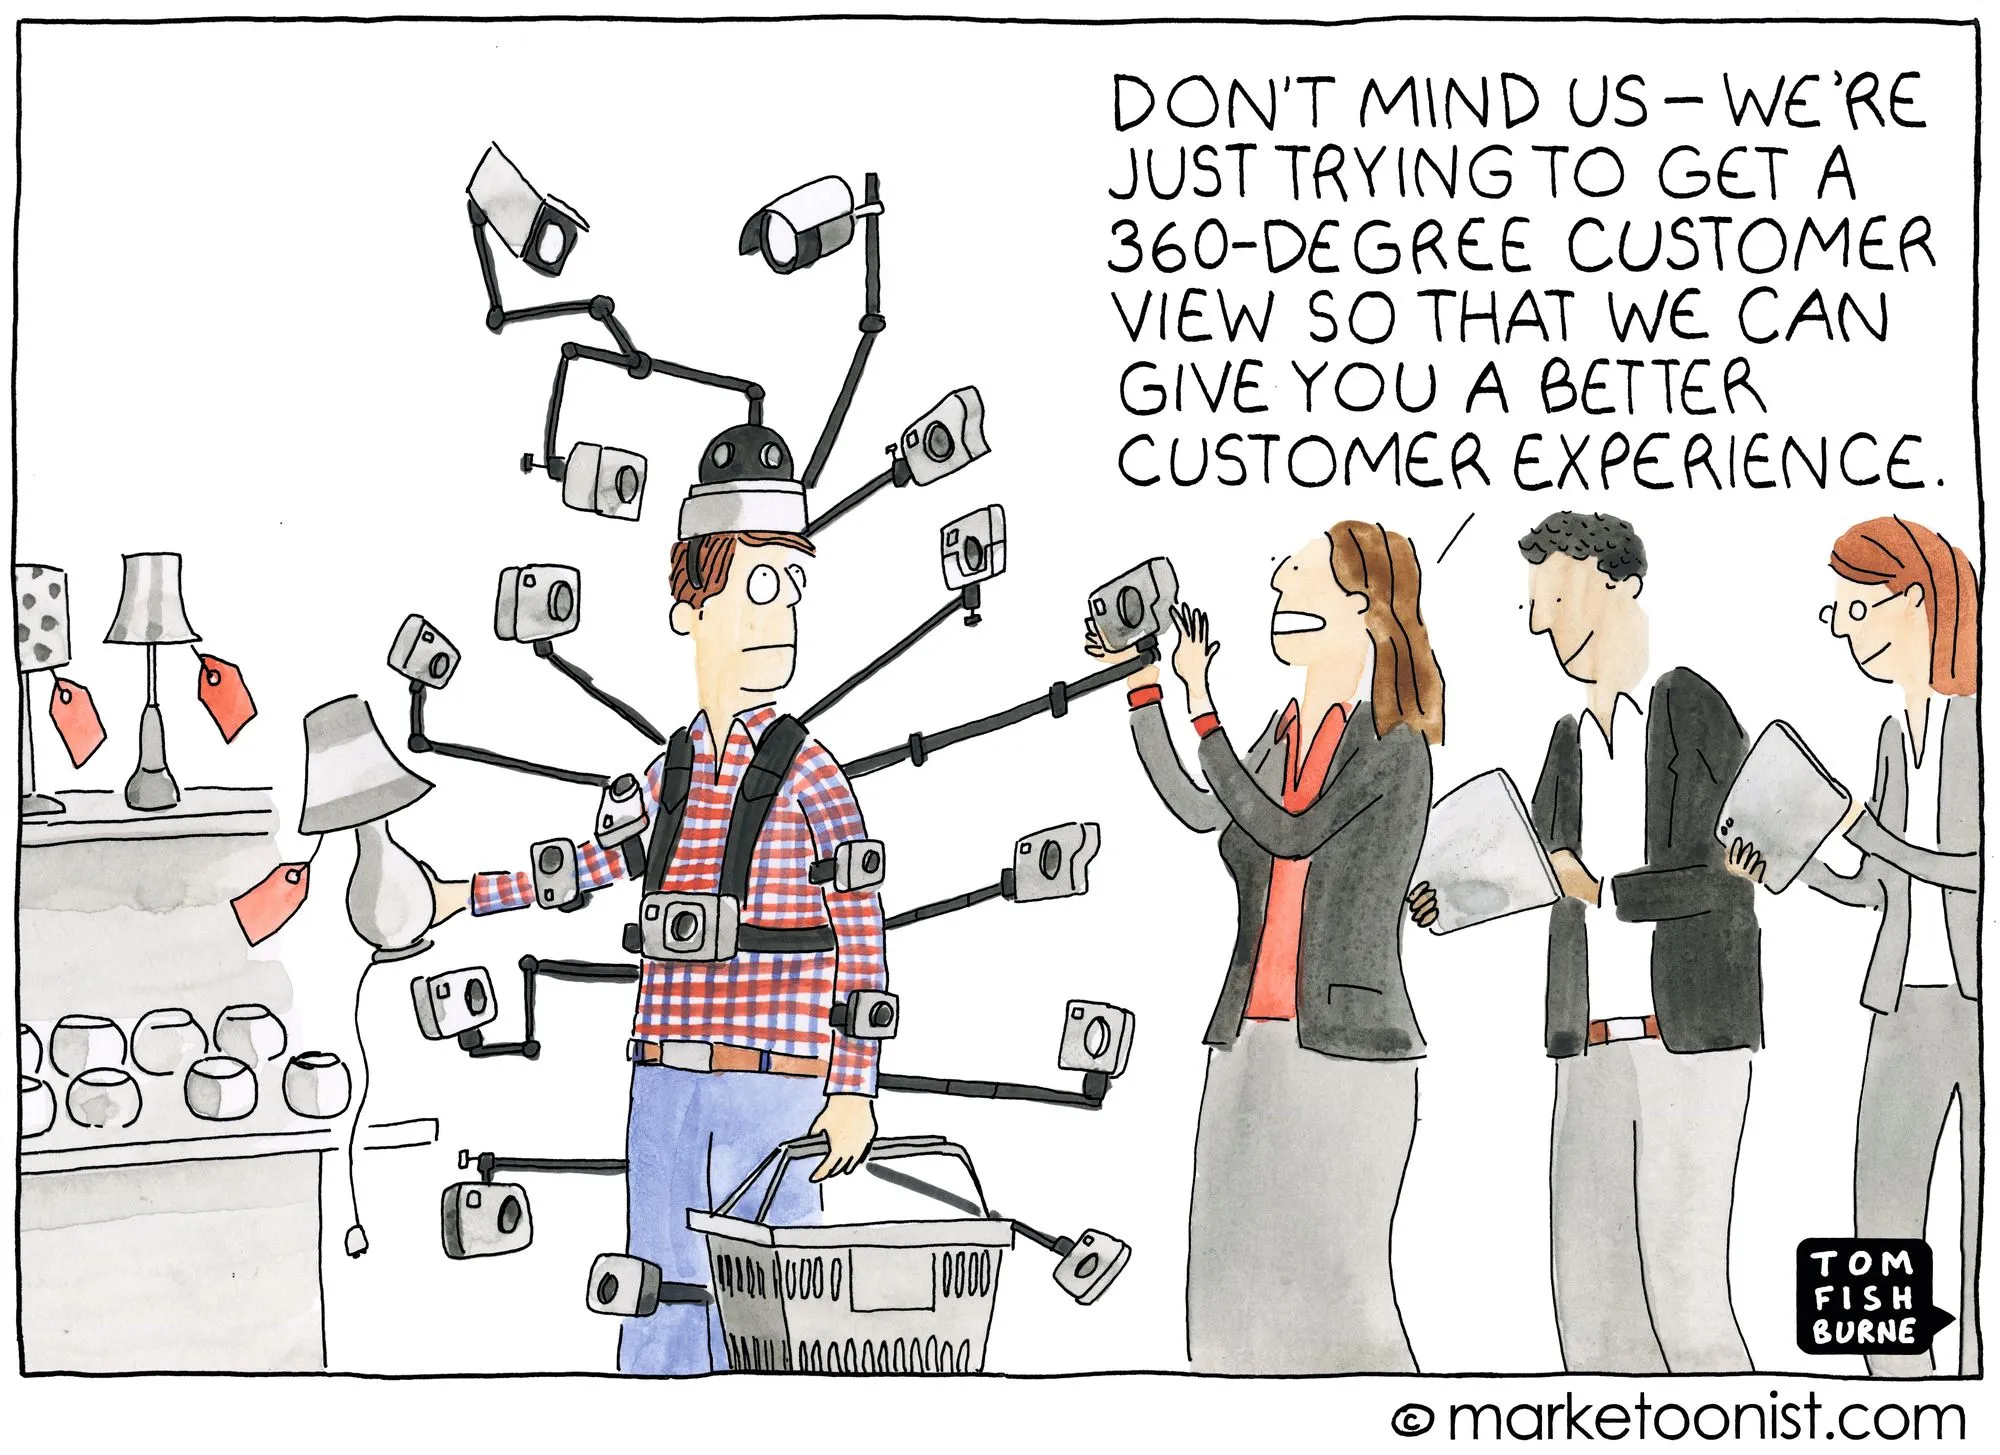 360-degree customer view, Tom Fishburne,Marketoonist.com, 2018.